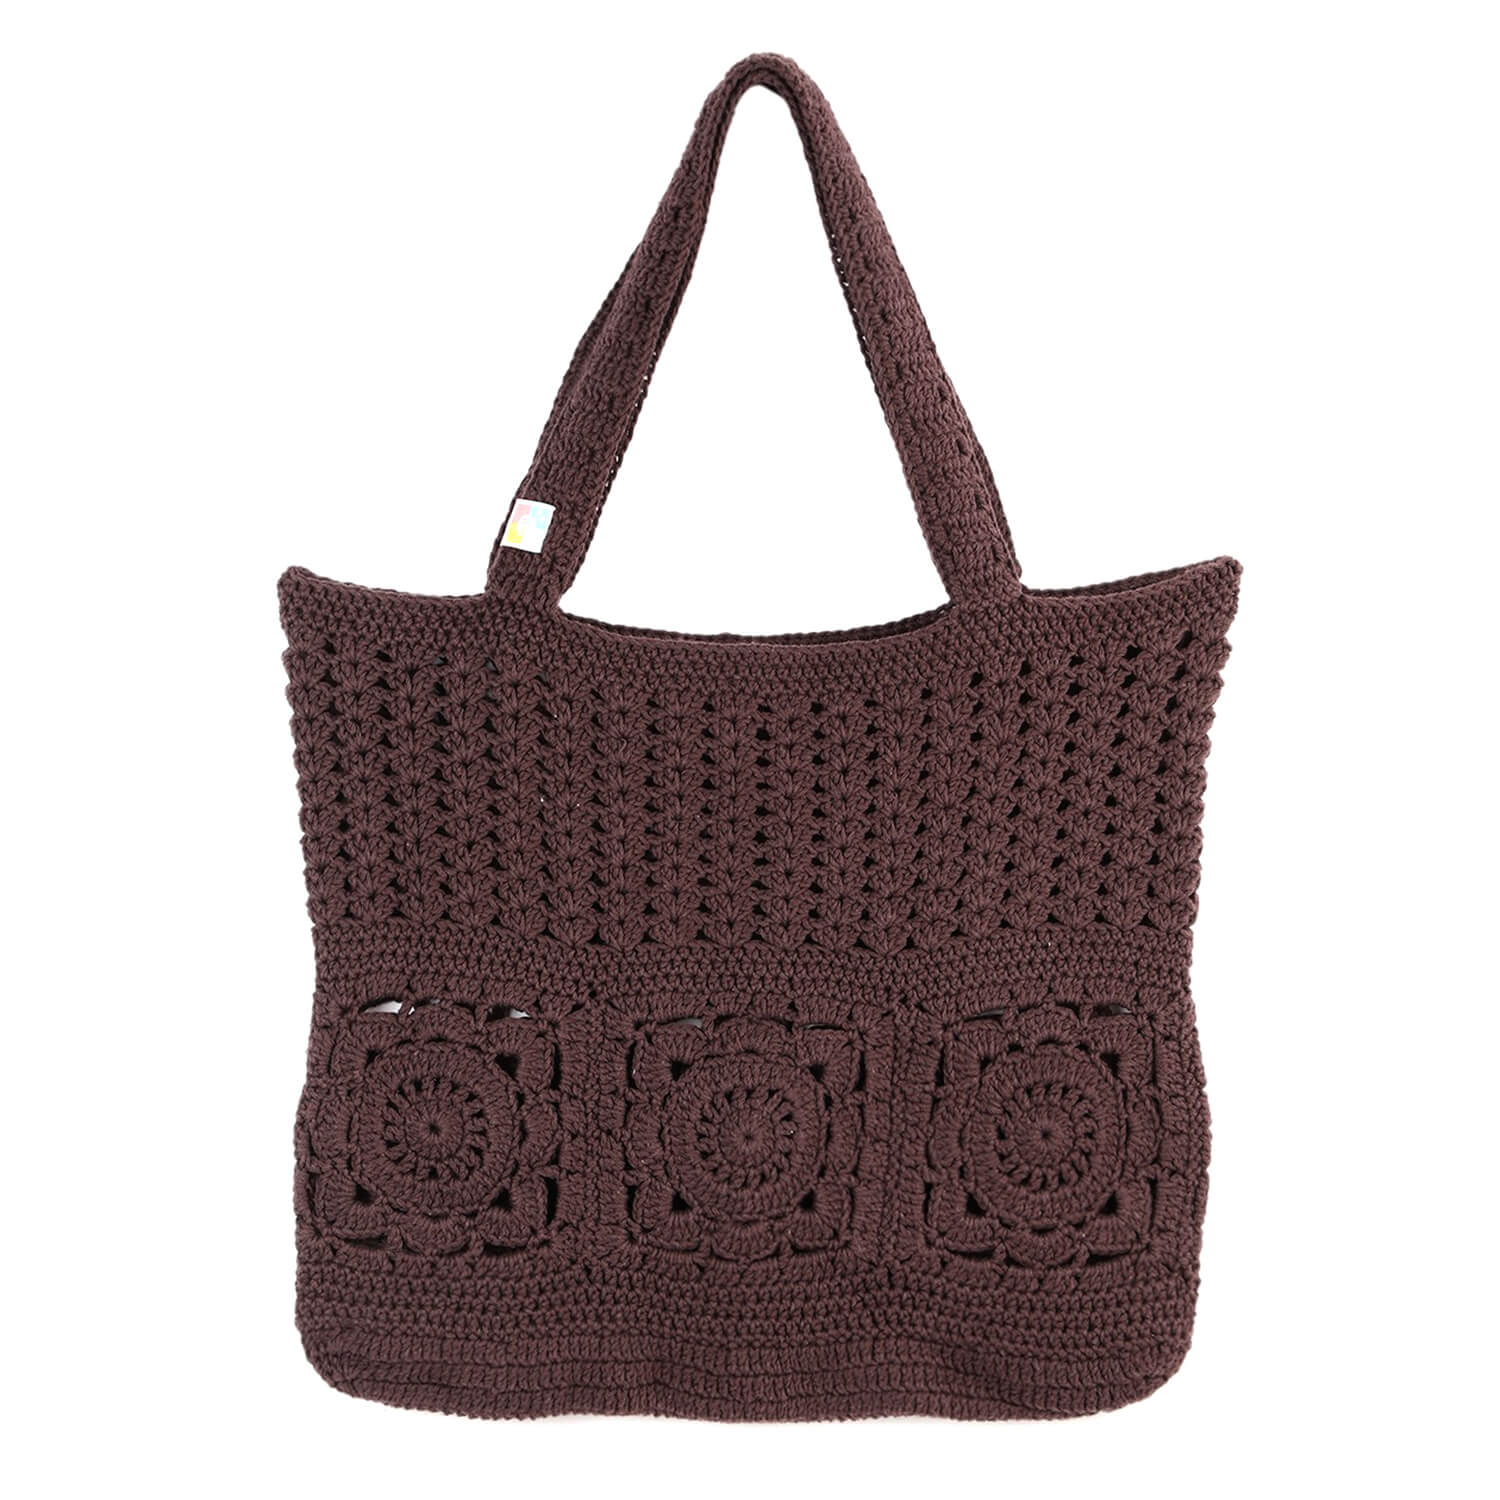 Handmade Crochet Market Bag - Brown 2690